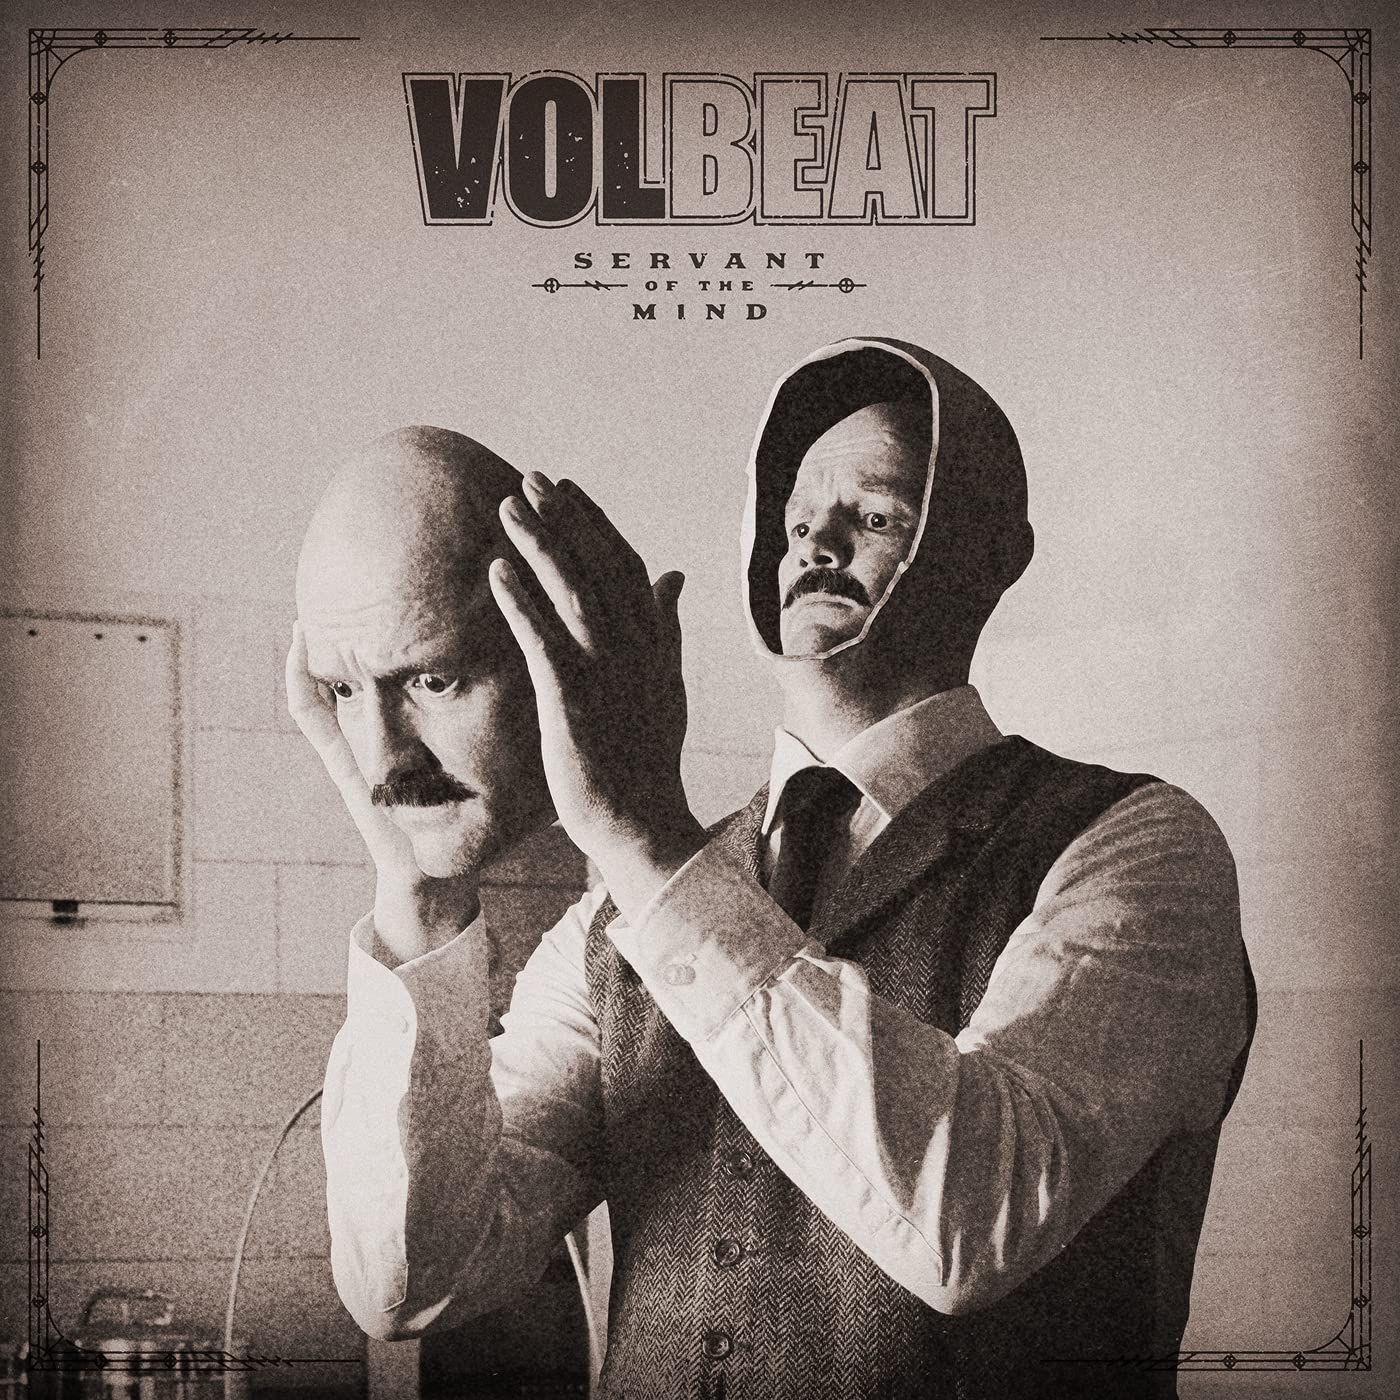 Volbeat-Servant Of The Mind-2CD-FLAC-2021-TOTENKVLT Download